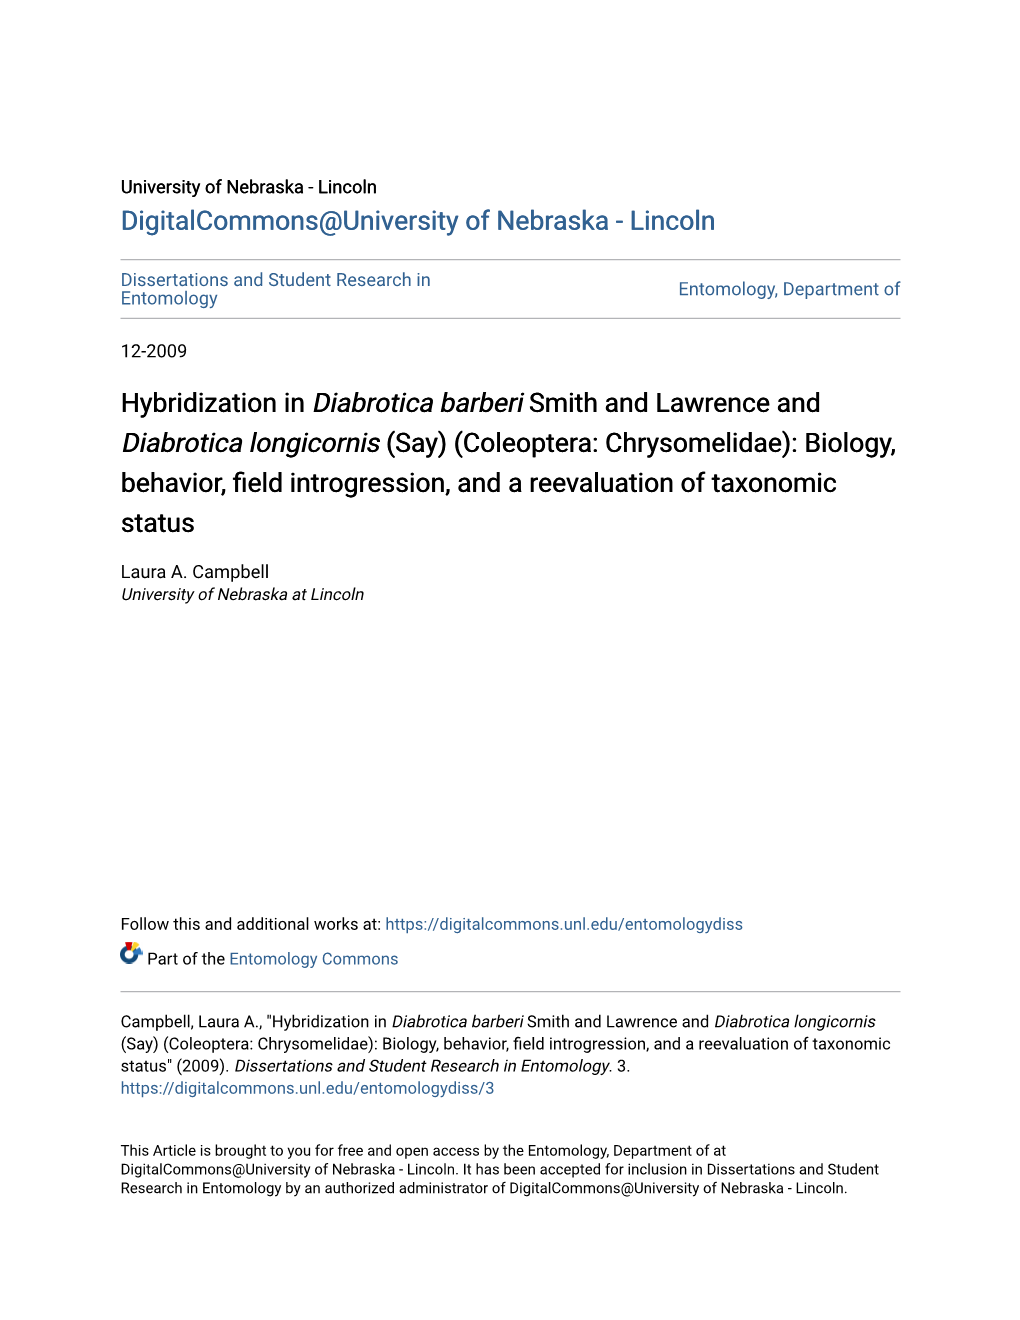 Hybridization in &lt;I&gt;Diabrotica Barberi&lt;/I&gt; Smith and Lawrence